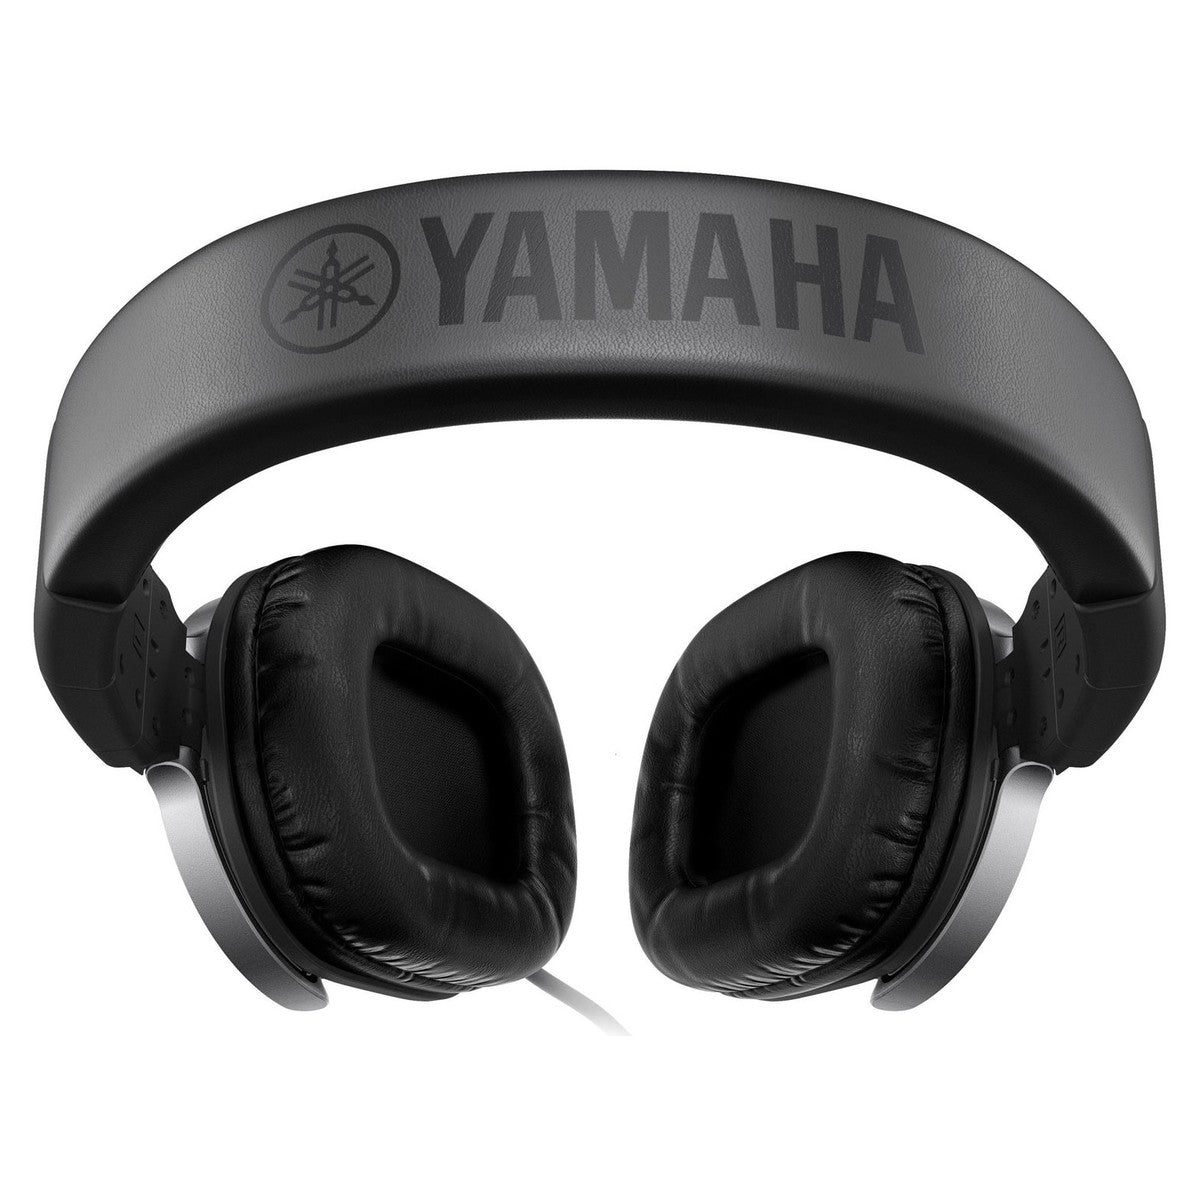 Yamaha MT8 Studio Monitor Headphones